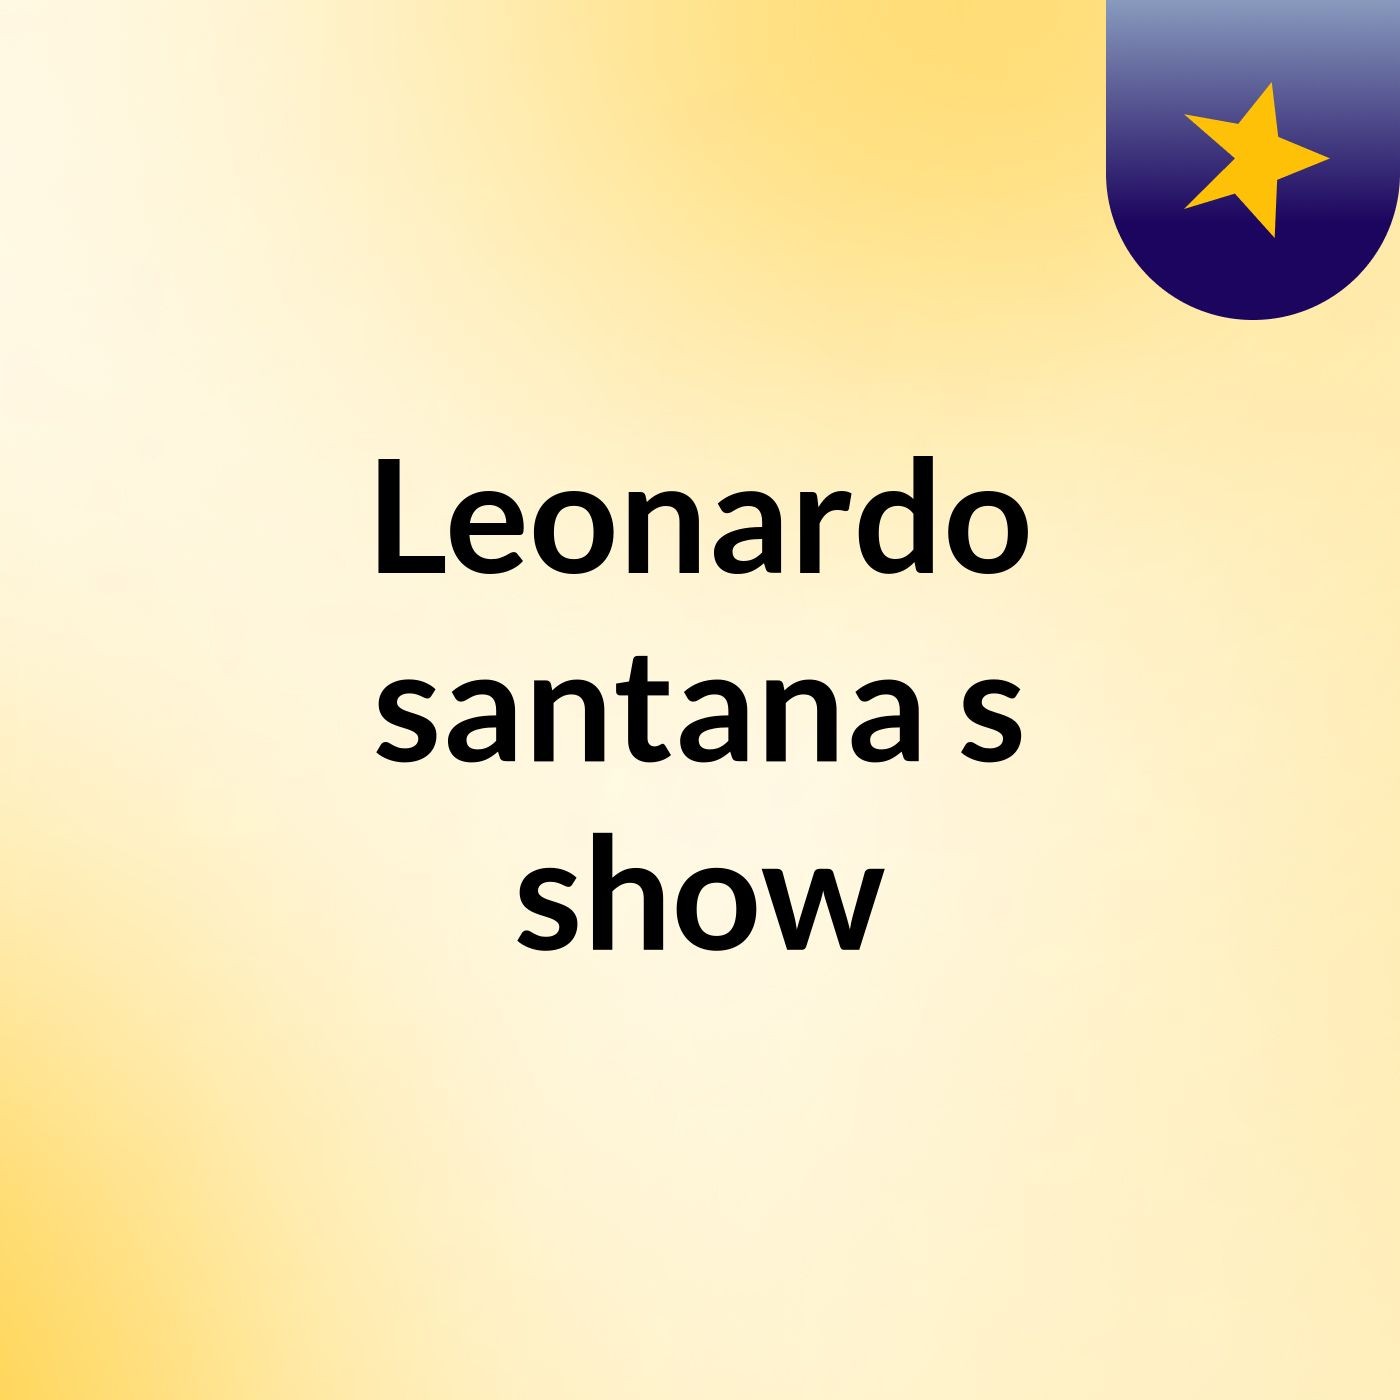 Leonardo santana's show